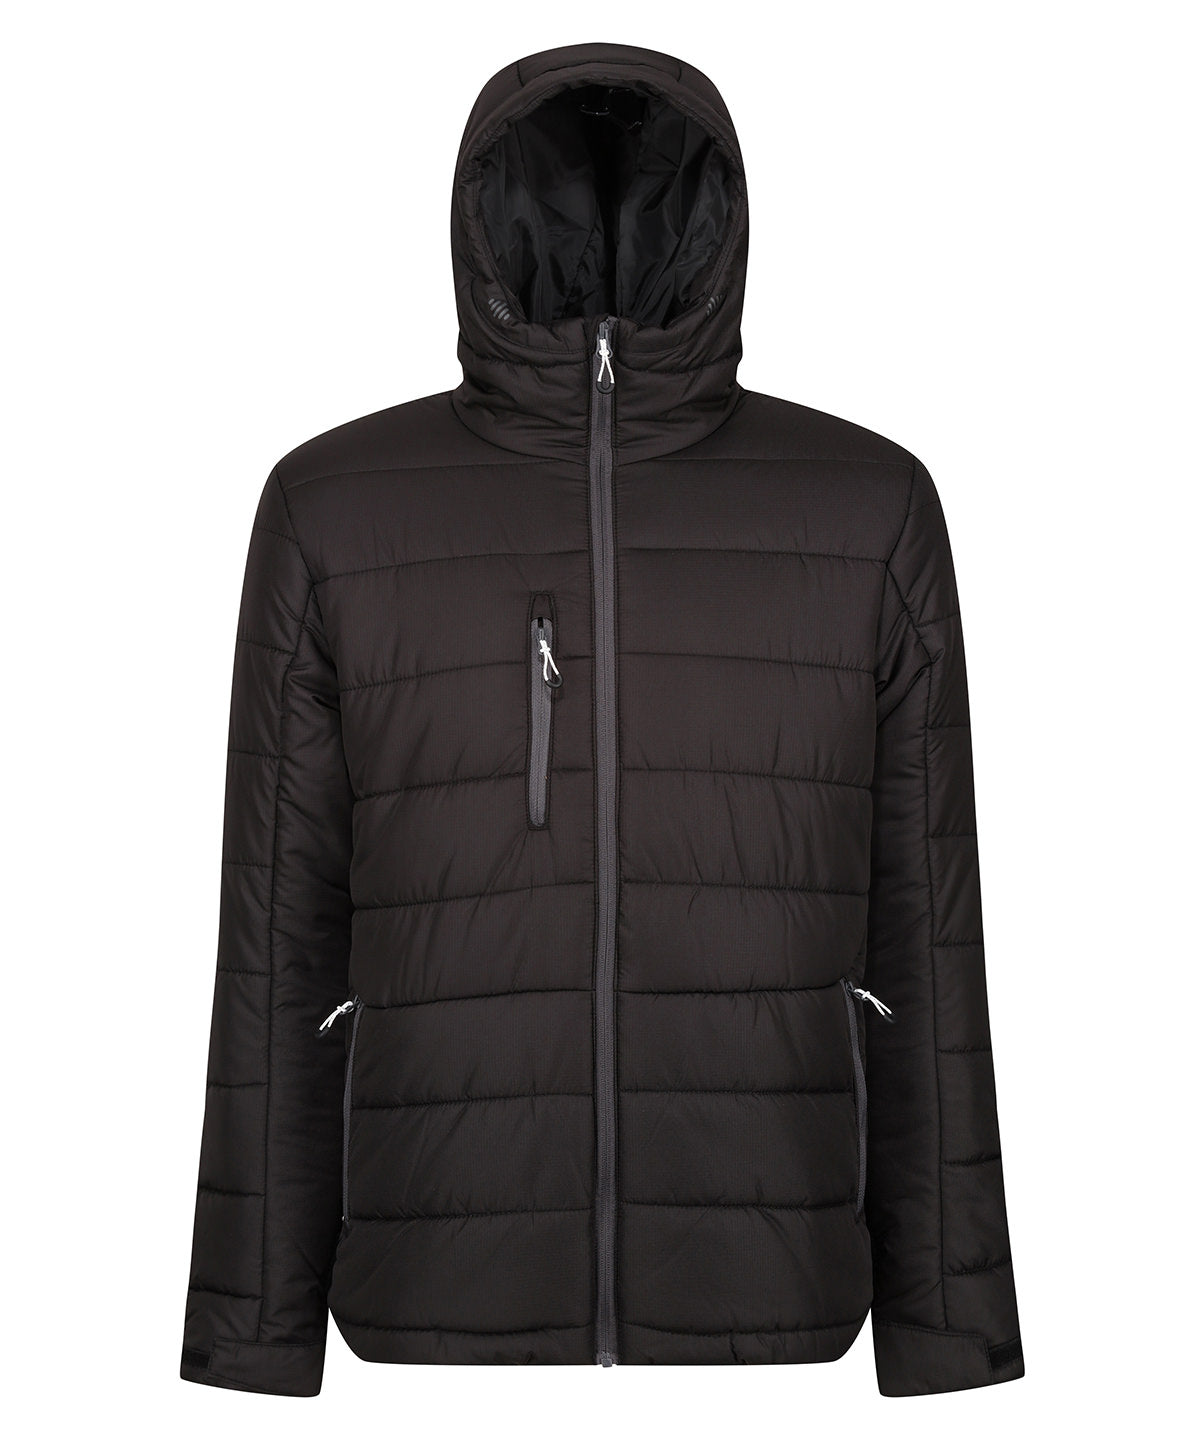 Jakkar - Navigate Thermal Hooded Jacket